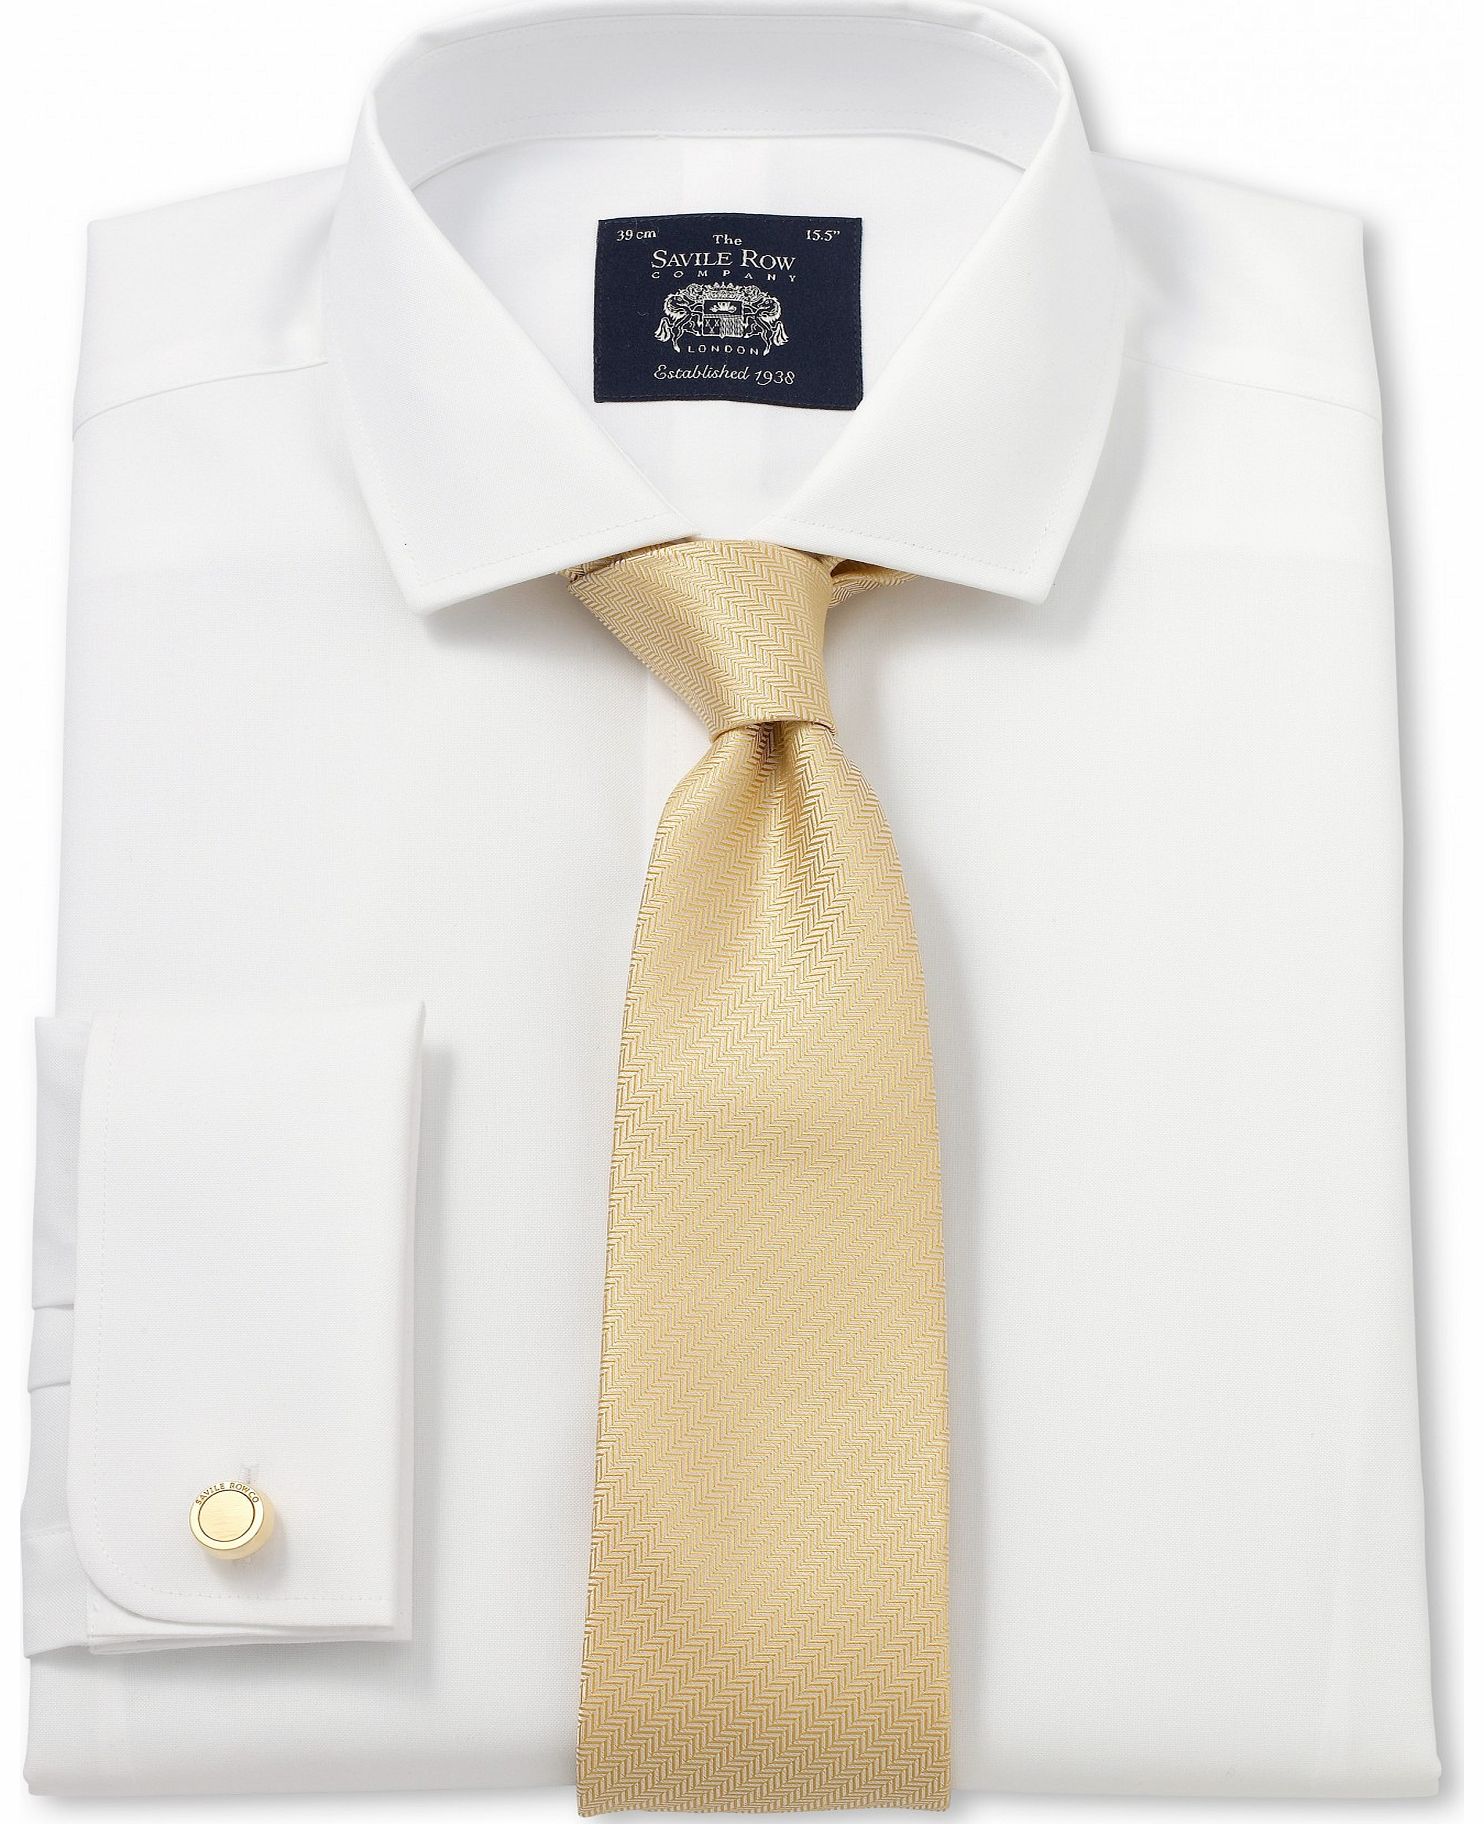 Savile Row Company White Poplin Non Iron Extra Slim Fit Shirt 15``